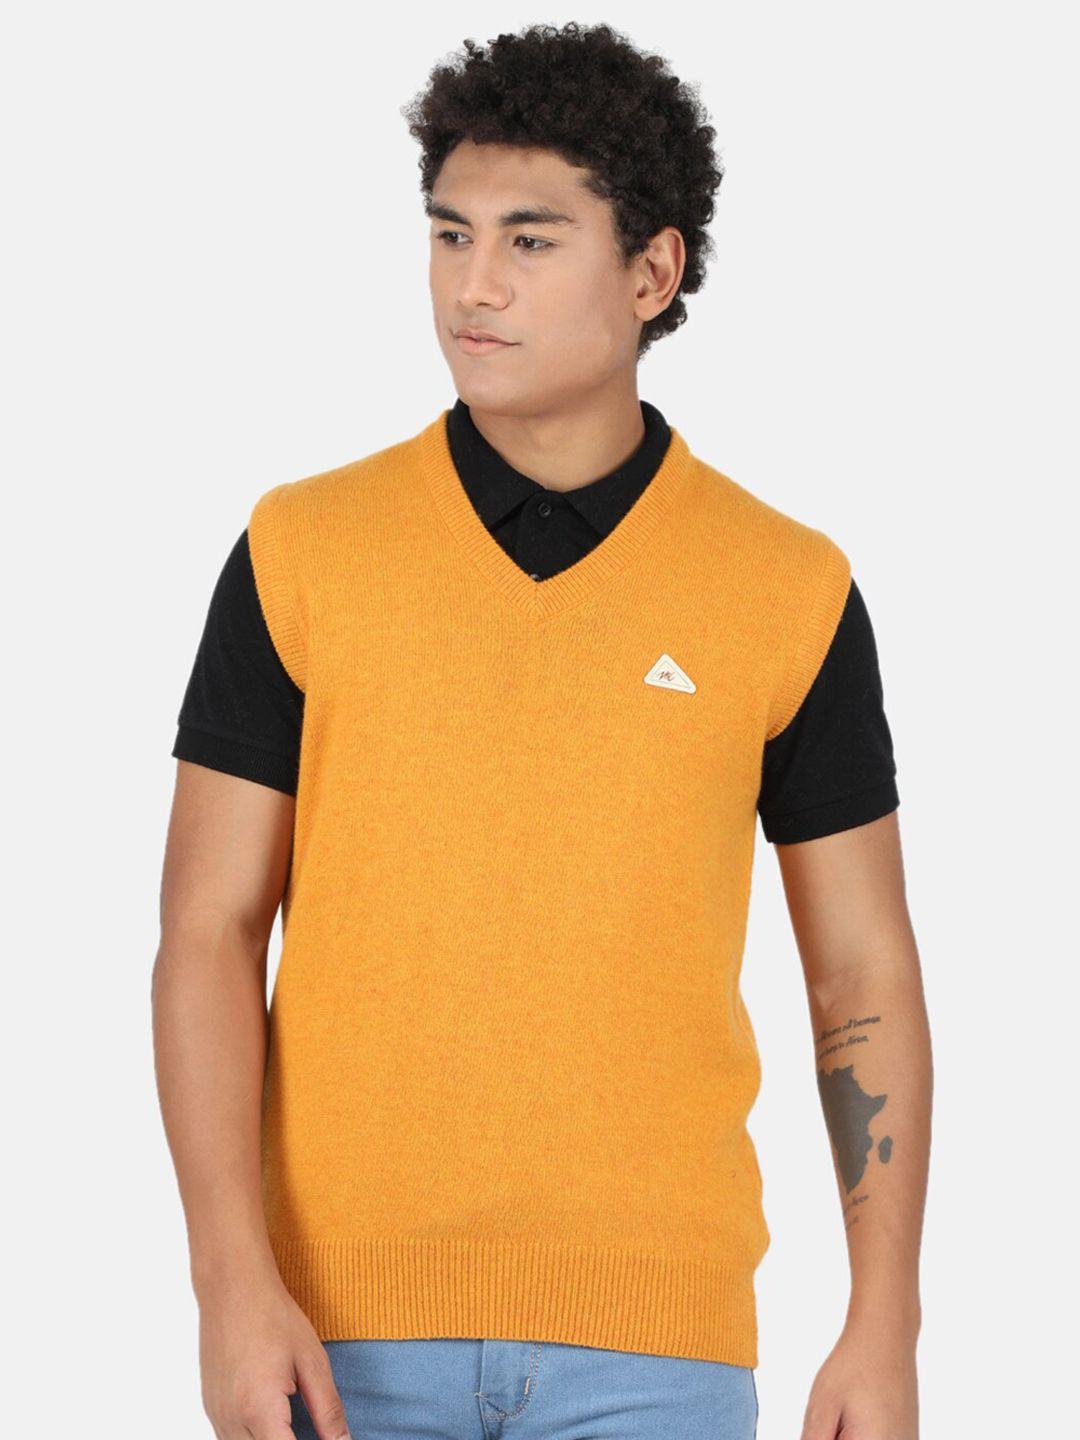 monte carlo men yellow & marigold sweater vest